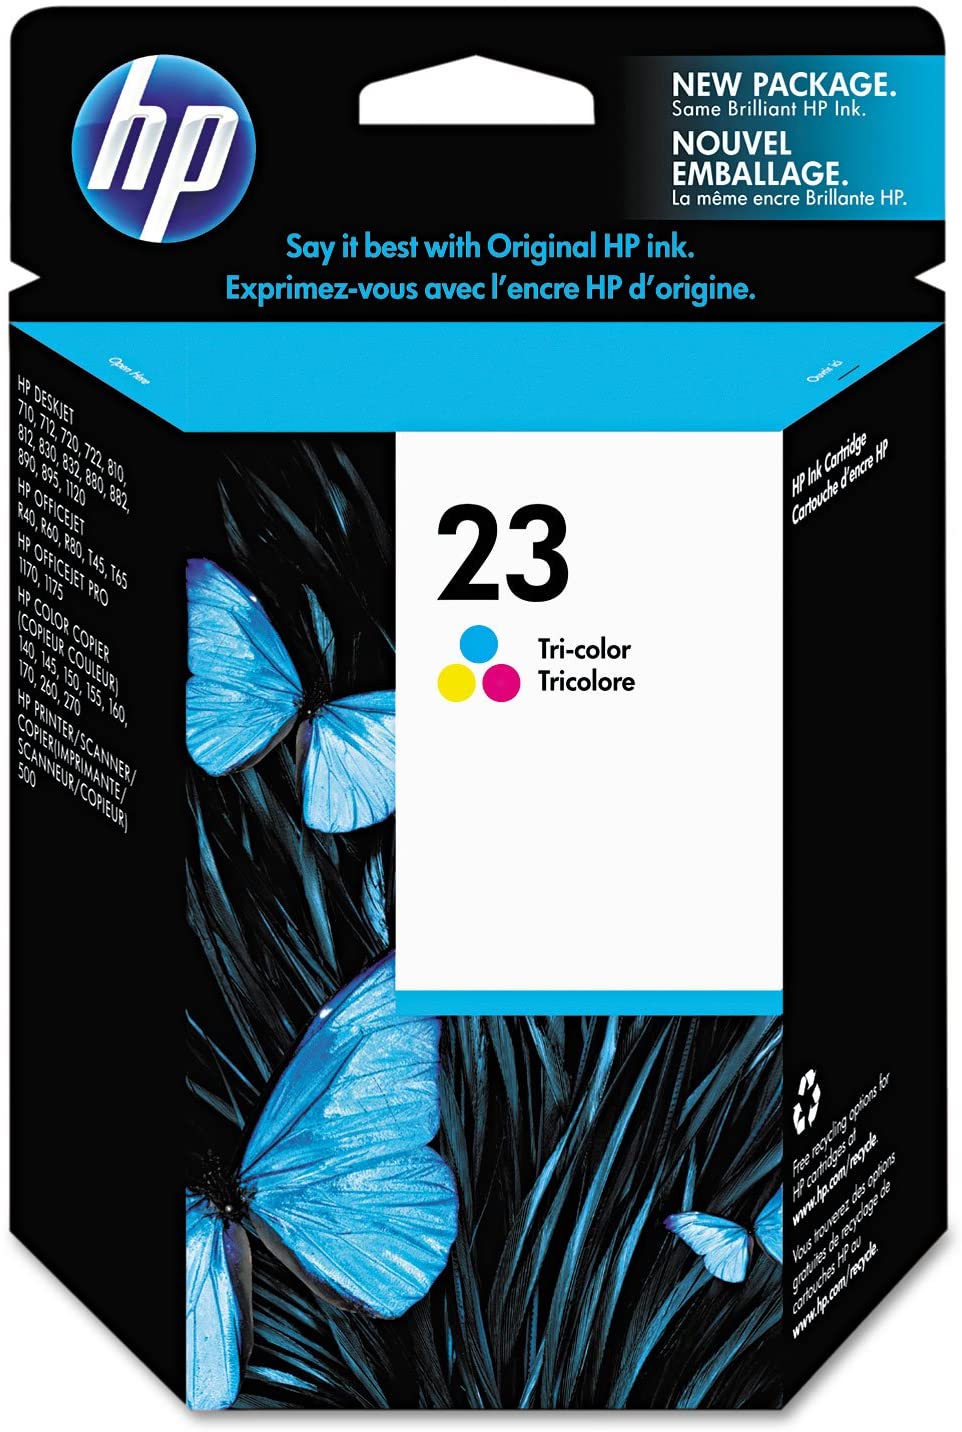 HP इंक कार्ट्रिज 23D बड़ा रंग NAM (त्रि-रंग) 